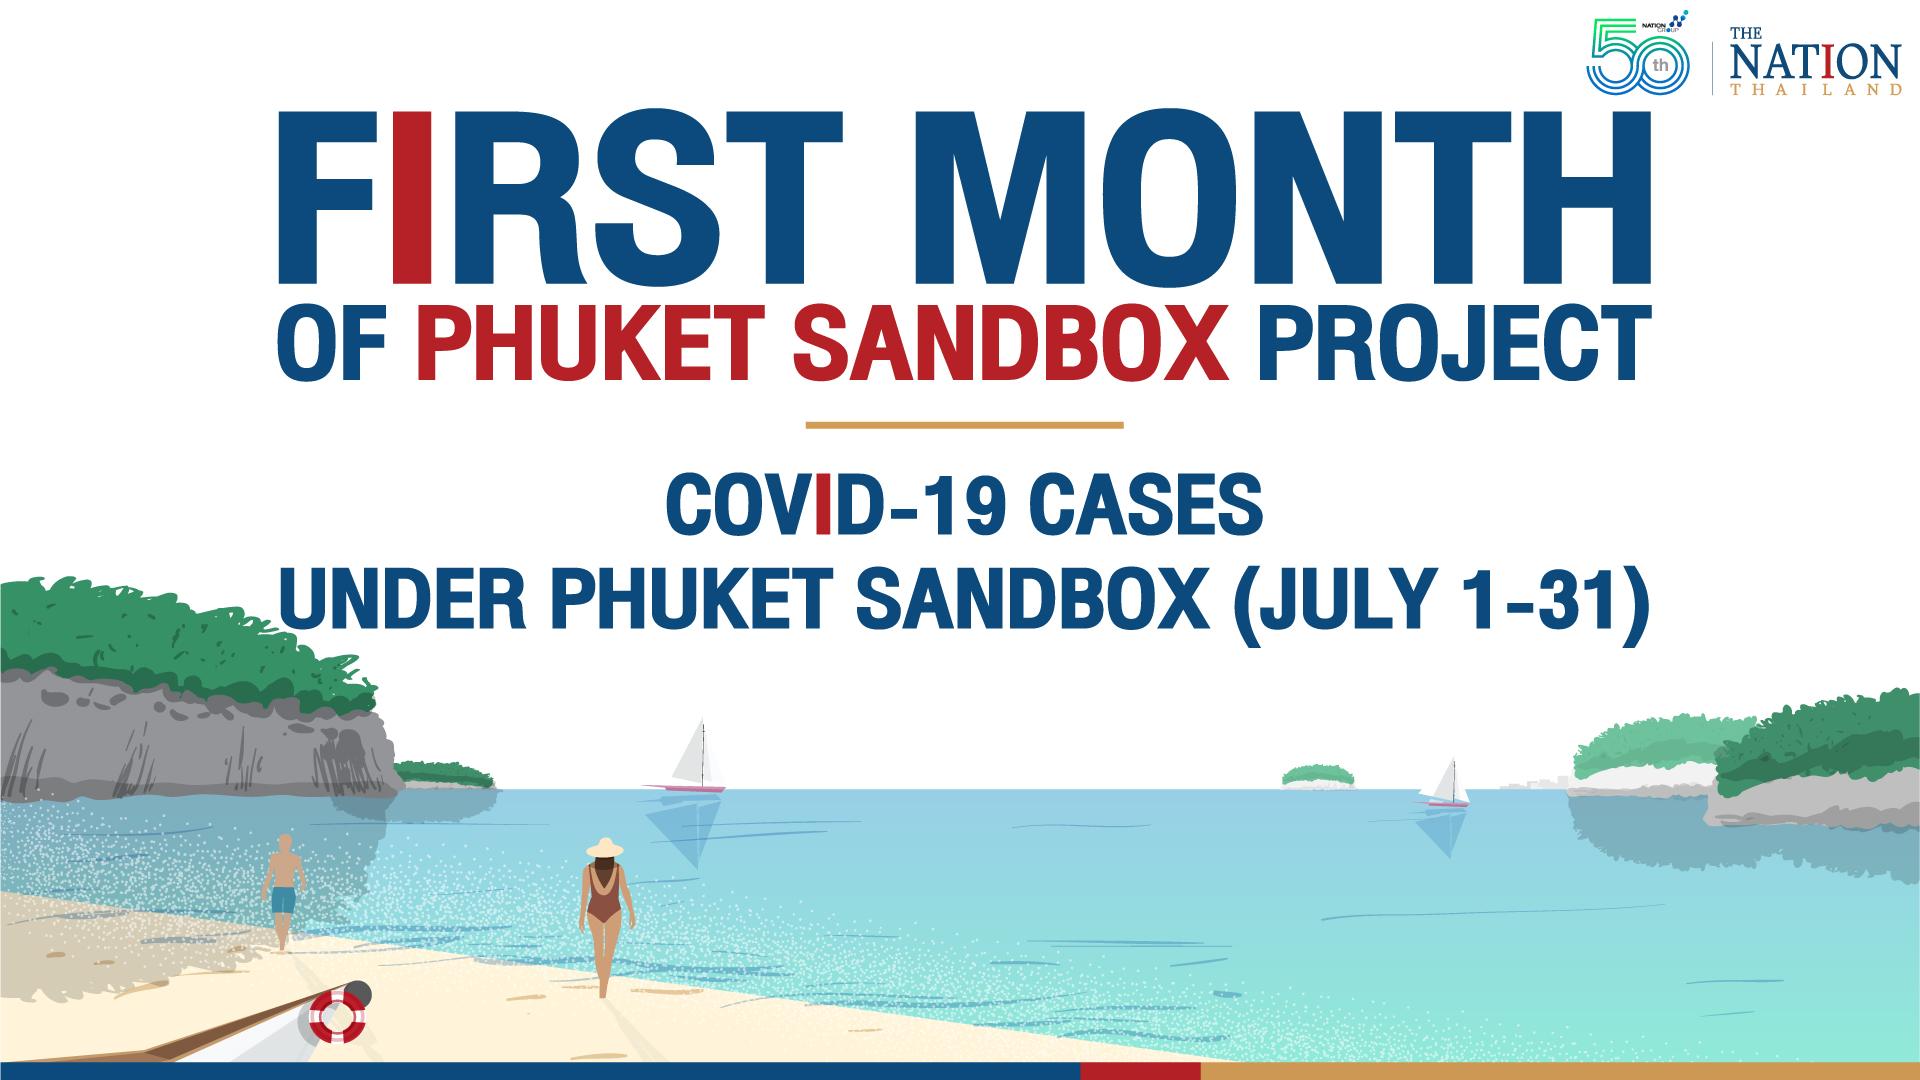 First month of Phuket Sandbox project